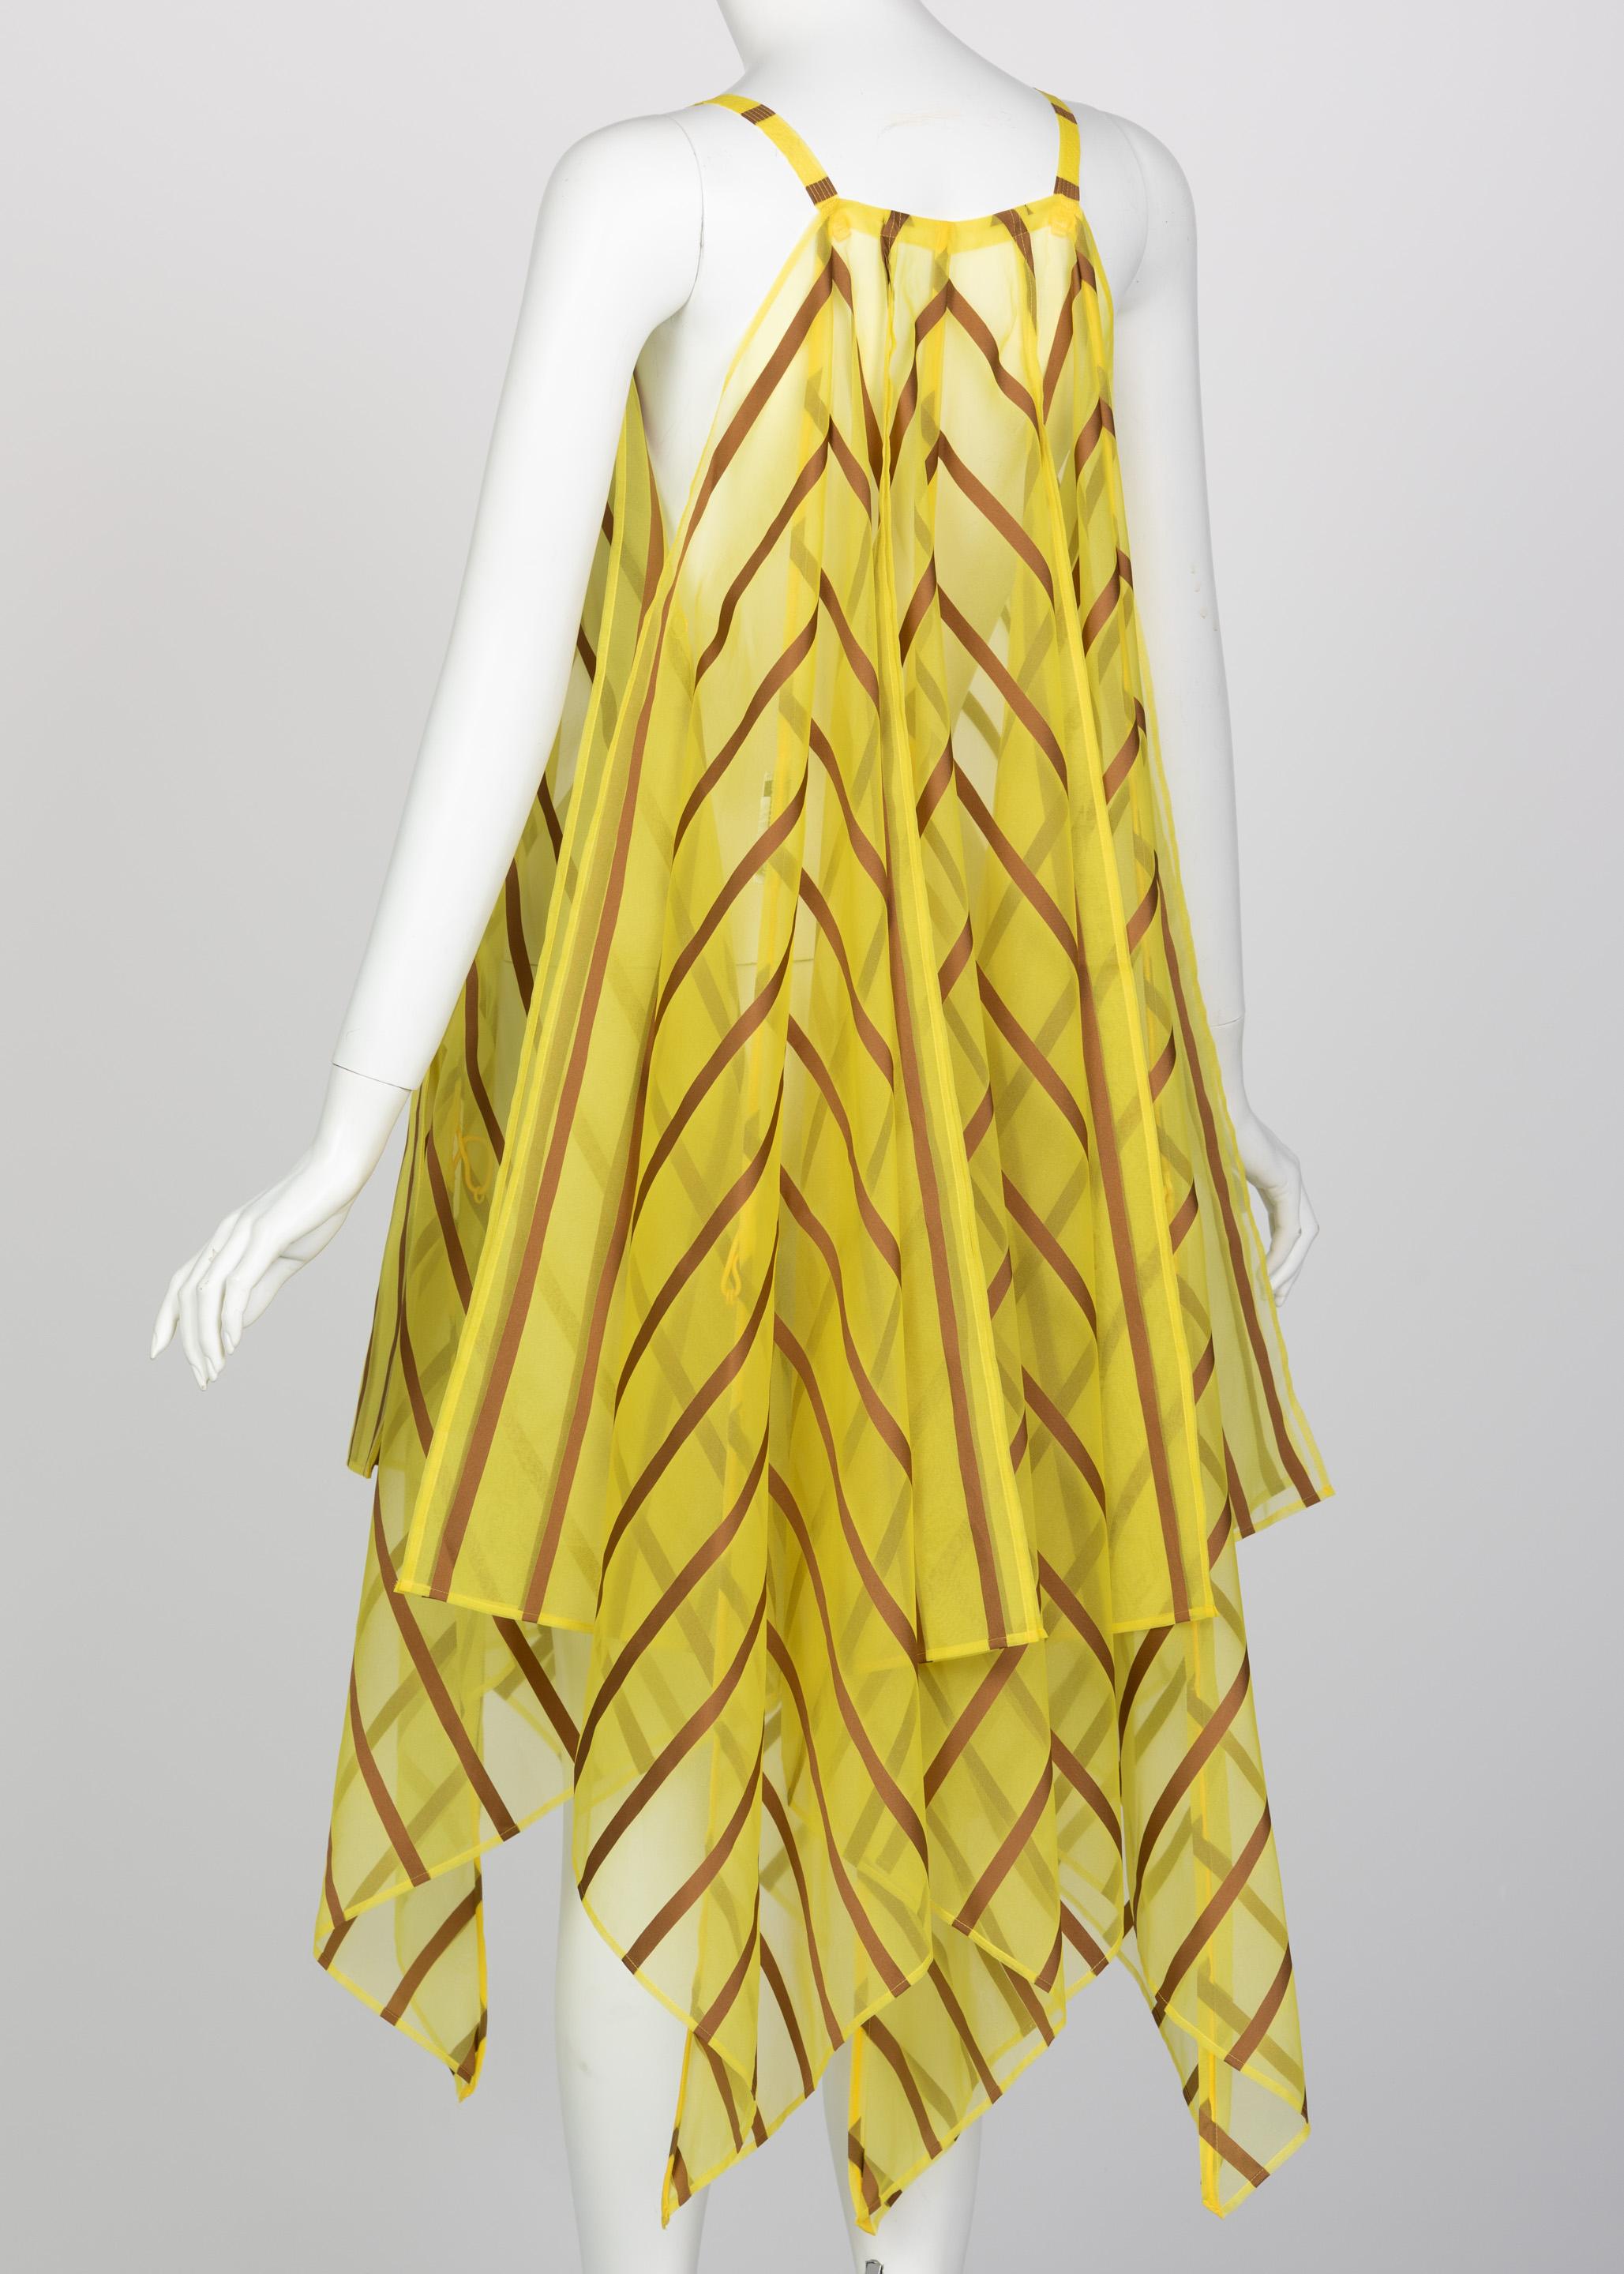 Issey Miyake Yellow Organza Brown Striped Handkerchief Dress For Sale 1